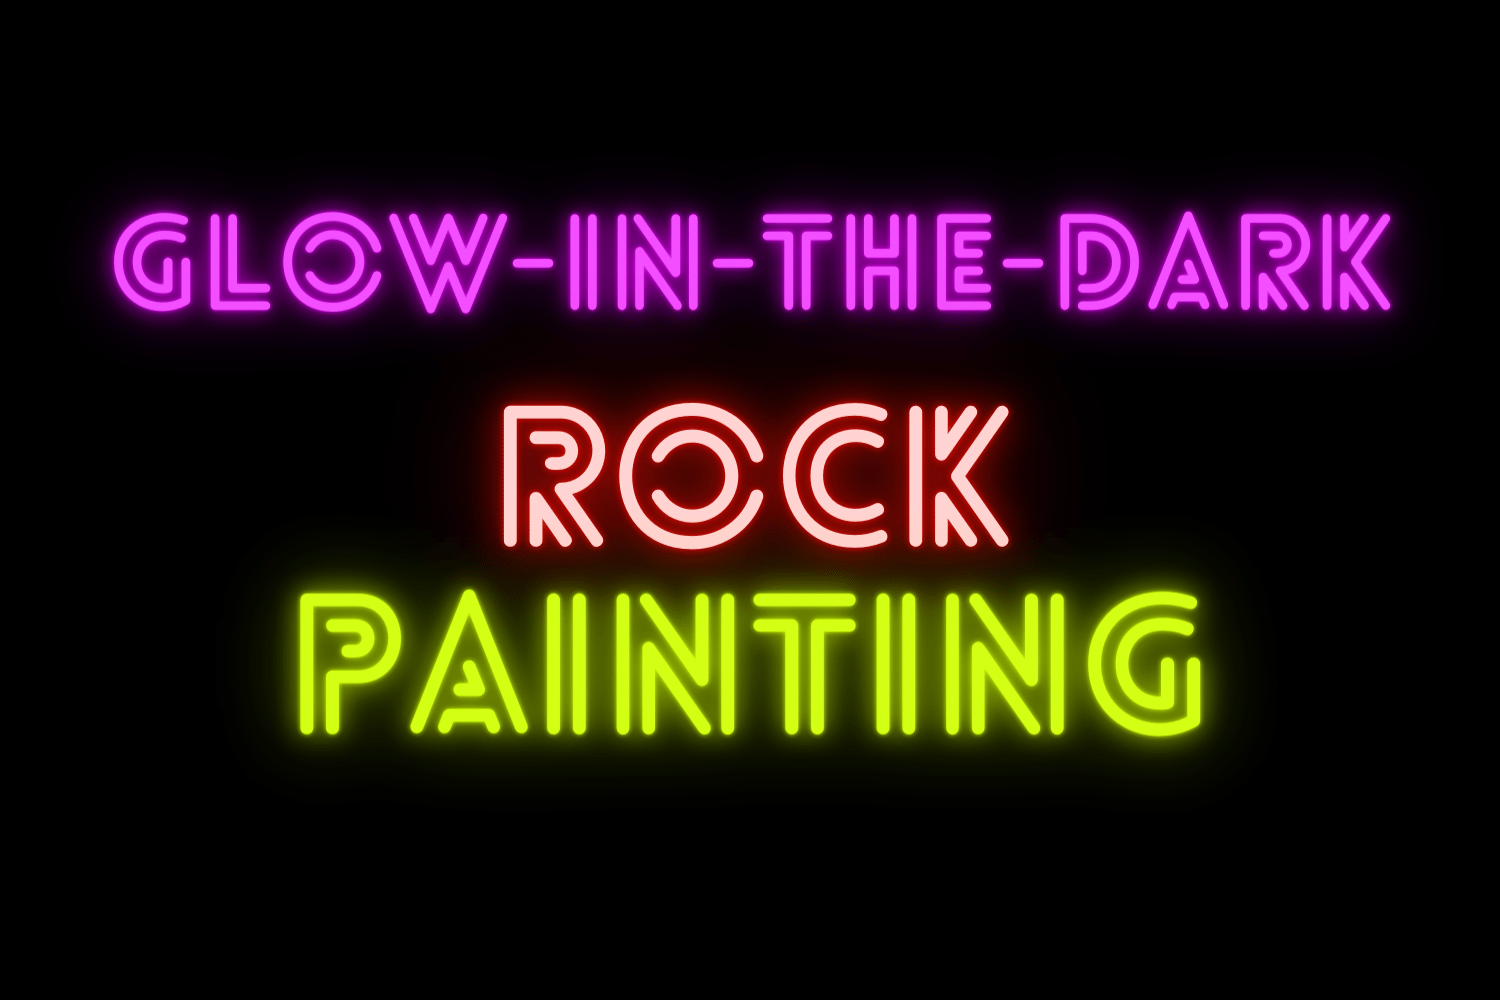 Glow in The Dark Rock Painting